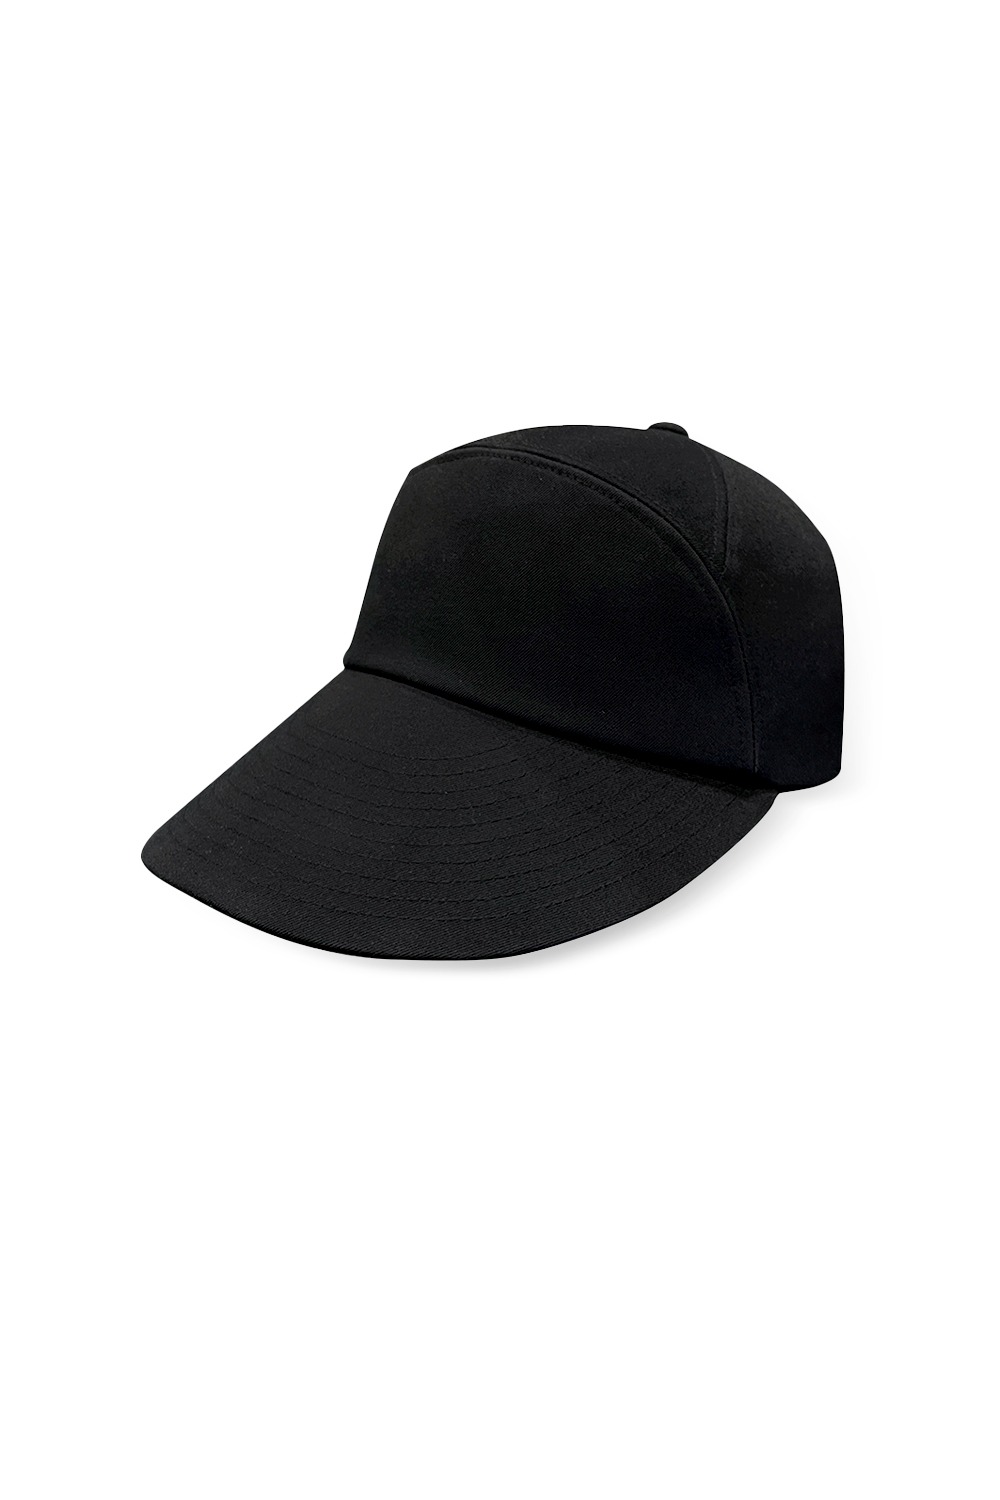 SAVVY CAP / LAZY-BLACK